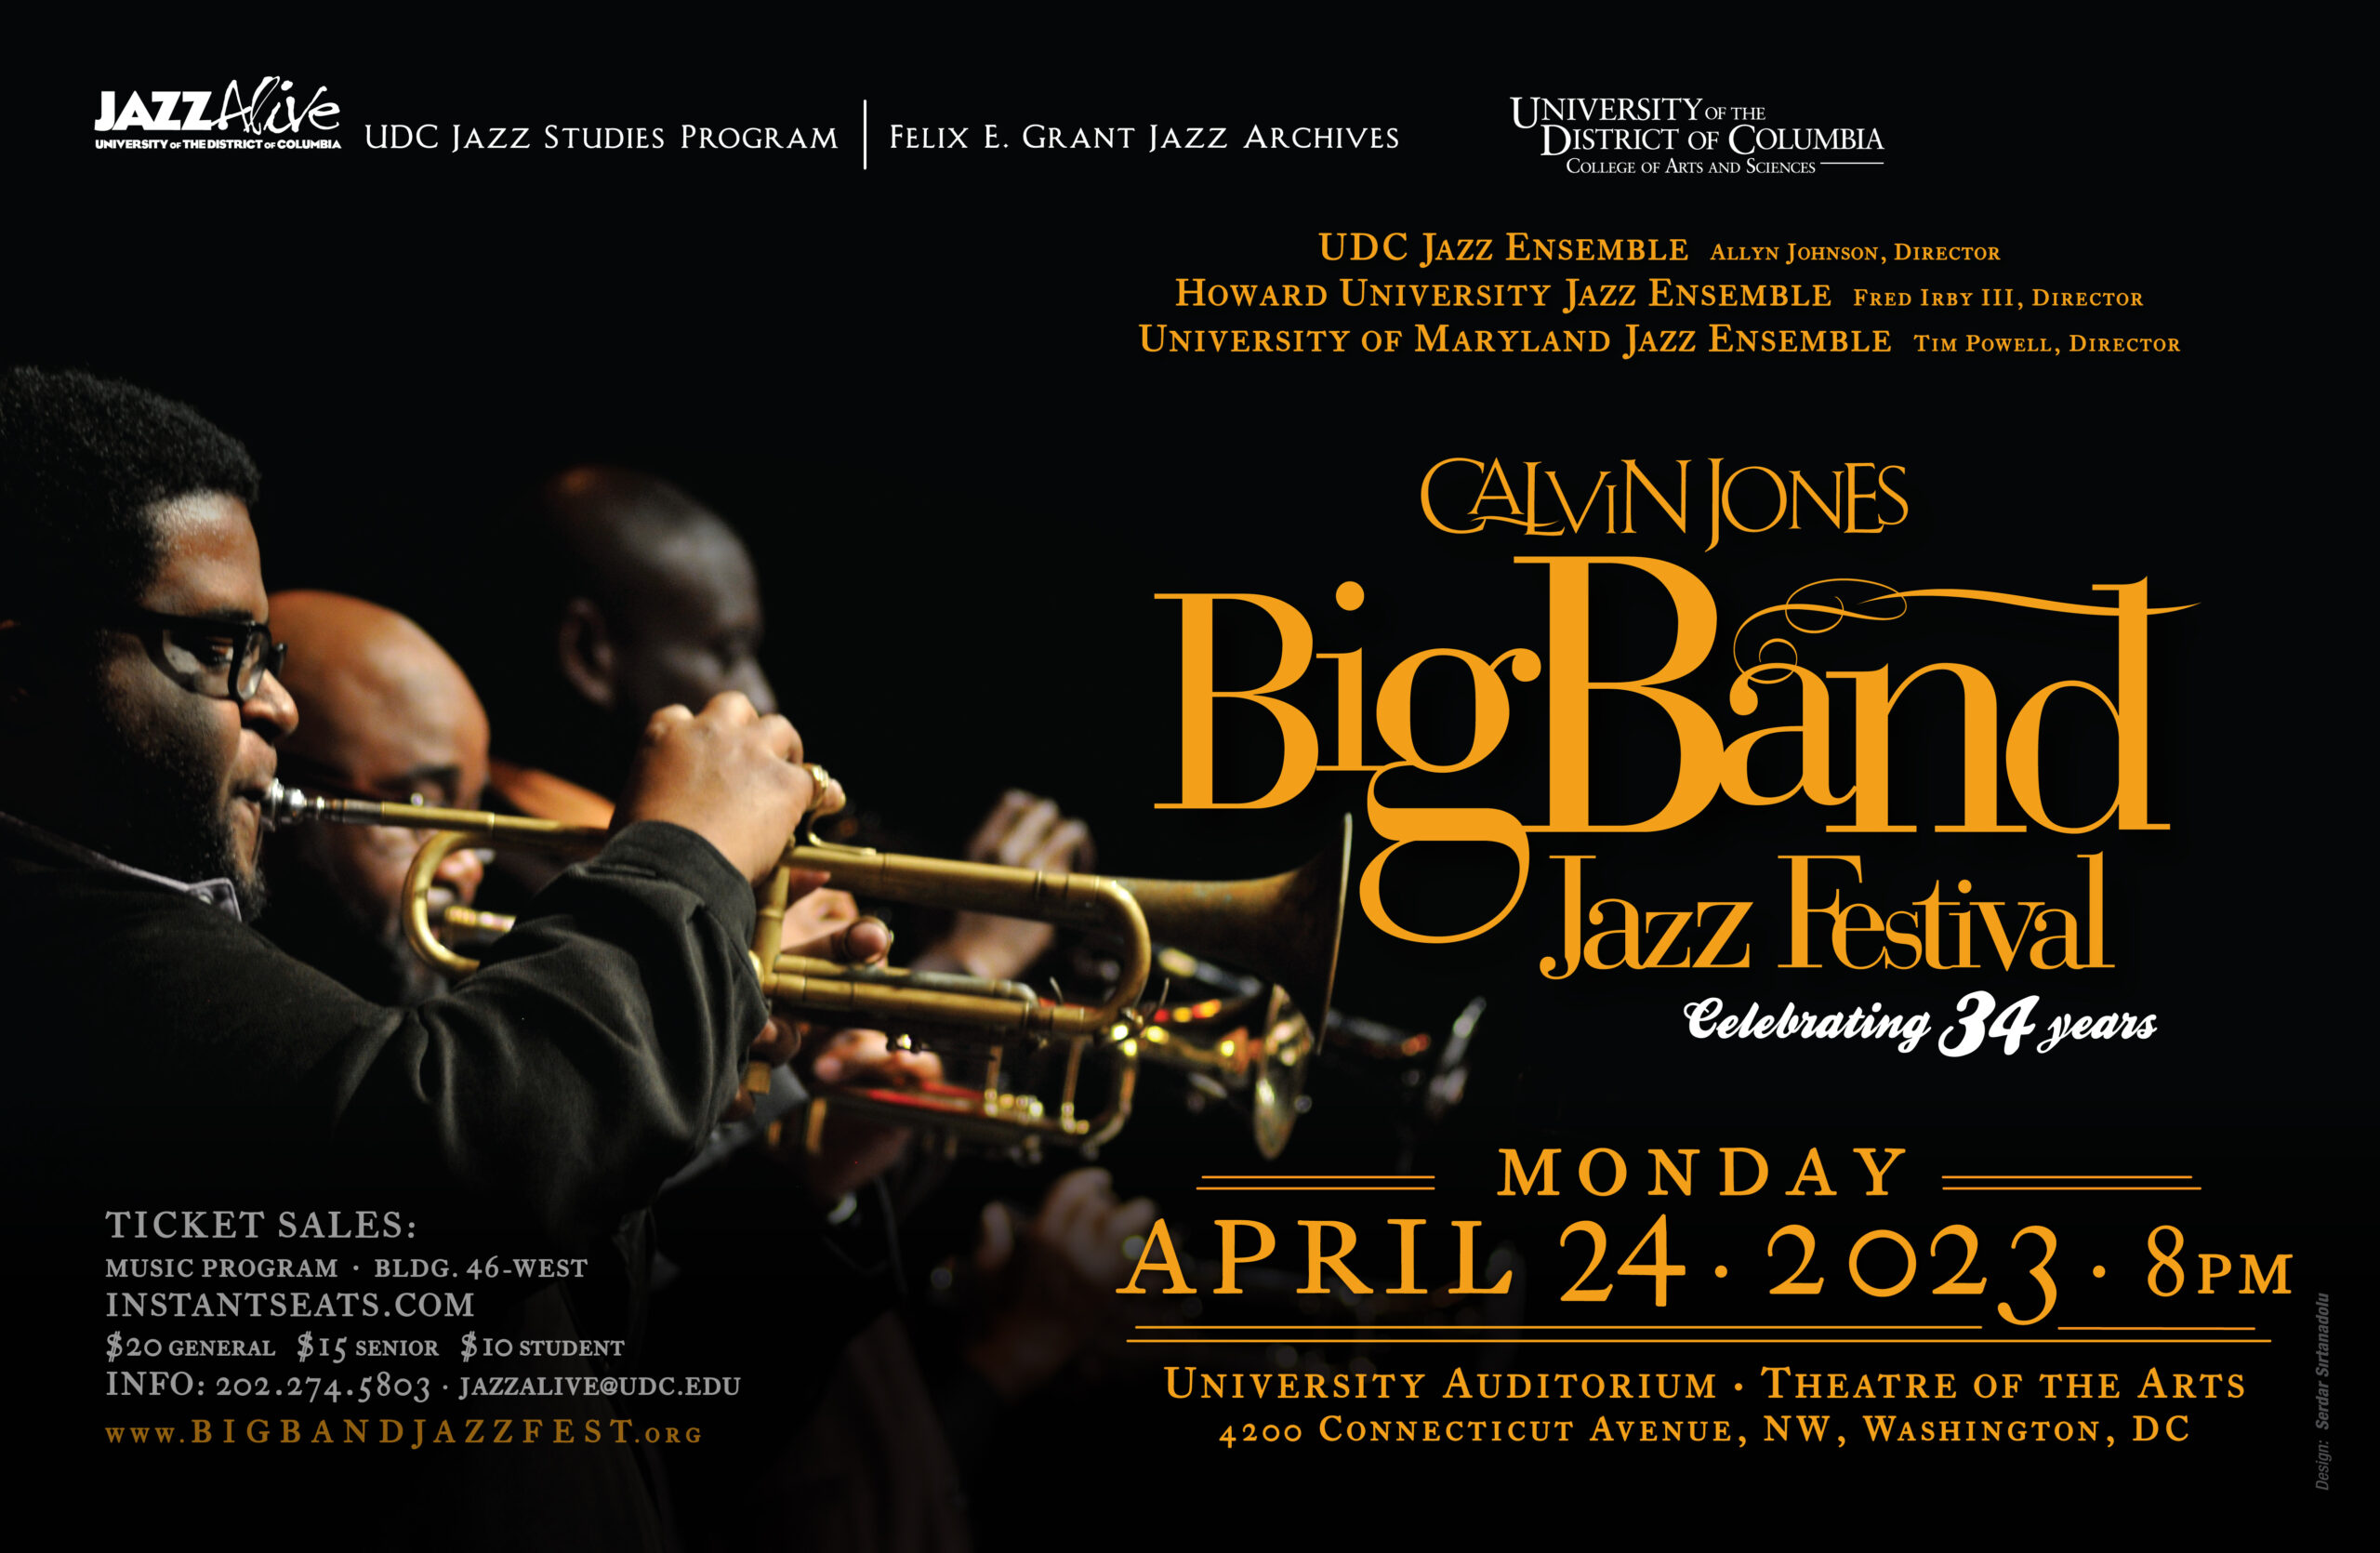 Calvin Jones BIG BAND Jazz Festival | College of Arts & Sciences